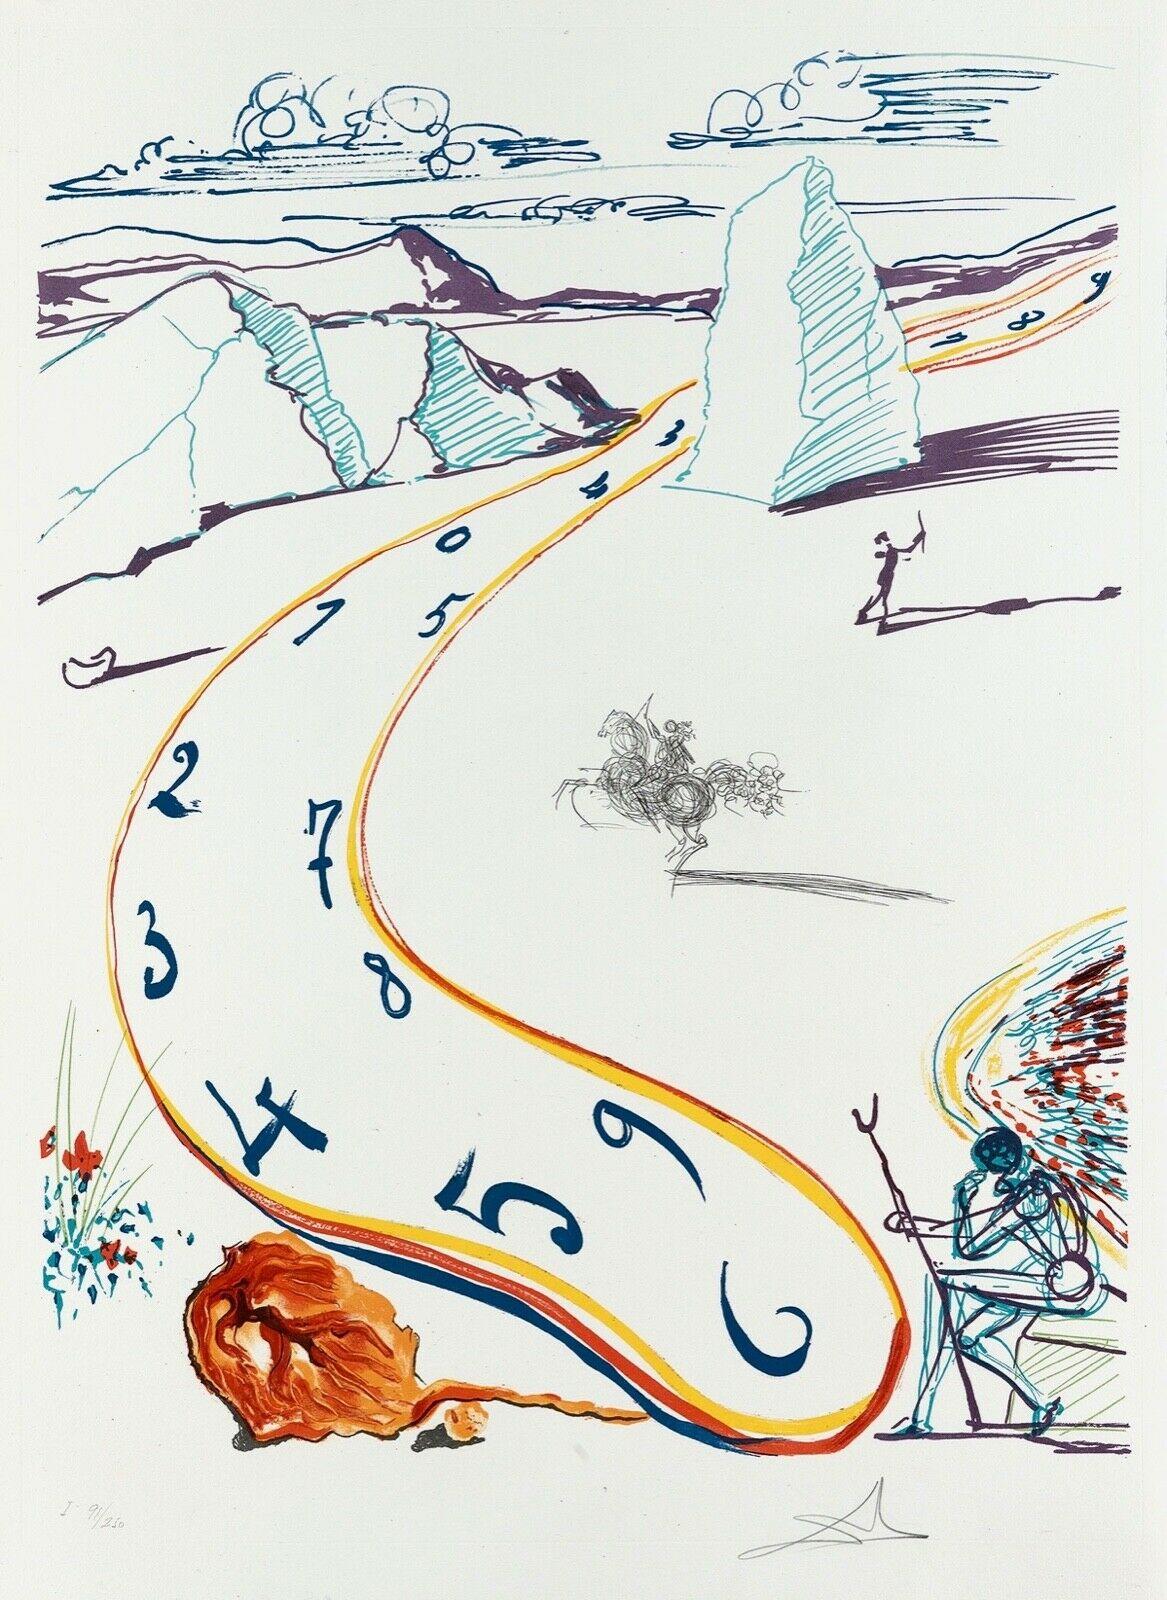 Salvador Dalí Figurative Print - Melting Space-Time, Limited Edition Lithograph, Salvador Dali